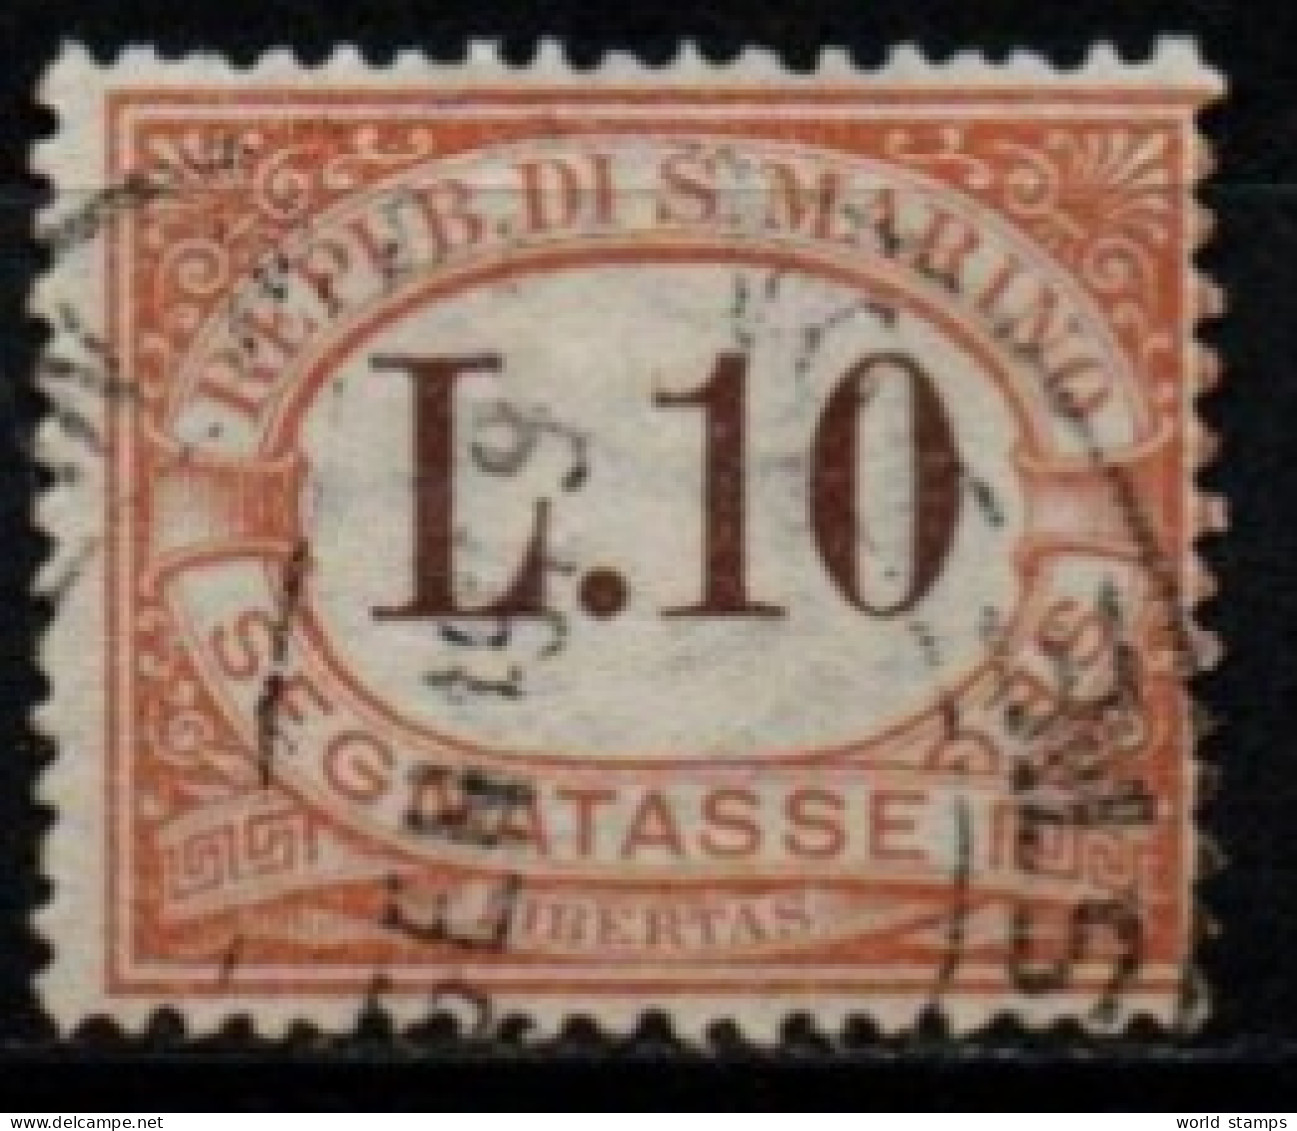 SAINT-MARIN 1925-8 O - Postage Due